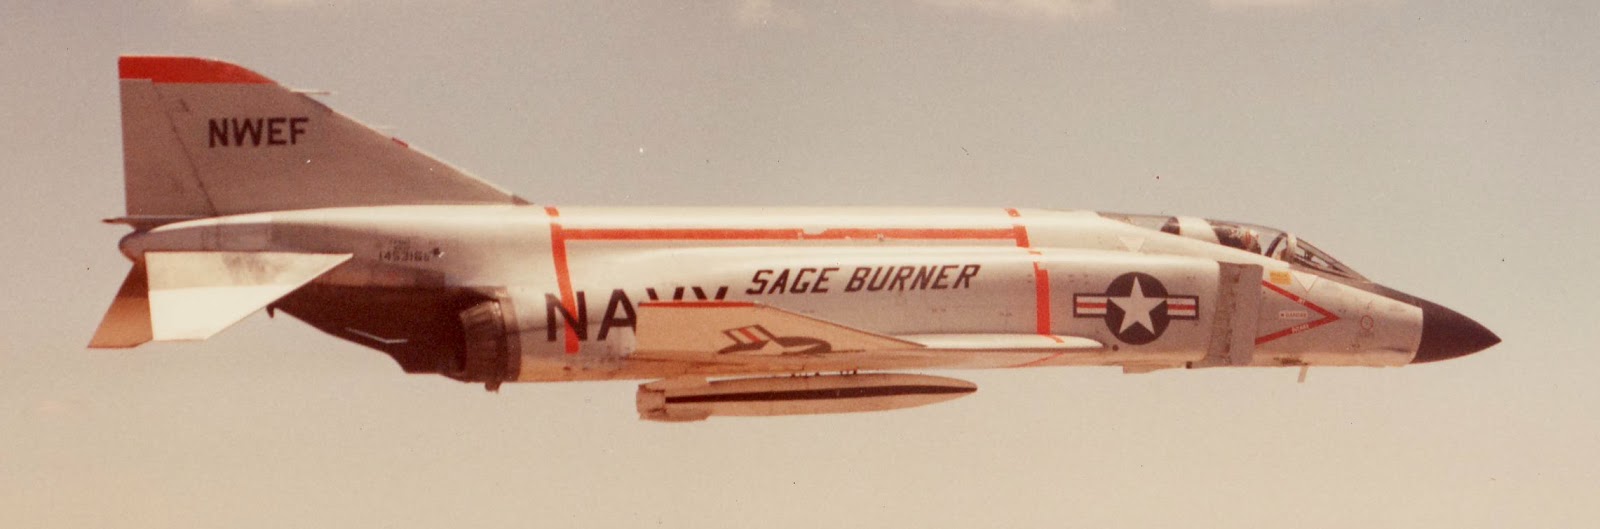 SAGE BURNER, McDonnell F4H-1F Phantom II, Bu. No. 145316